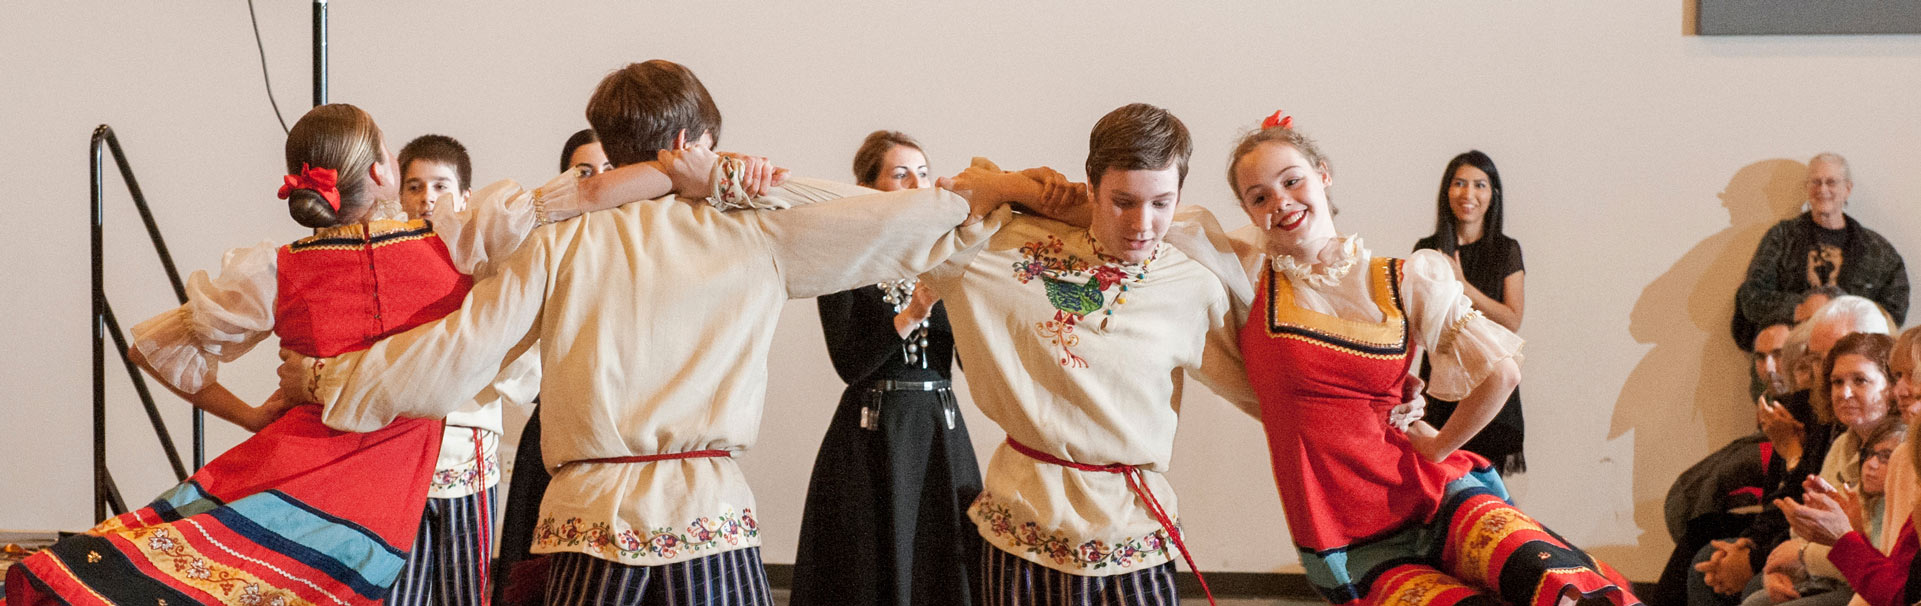 Traditional russian dancing